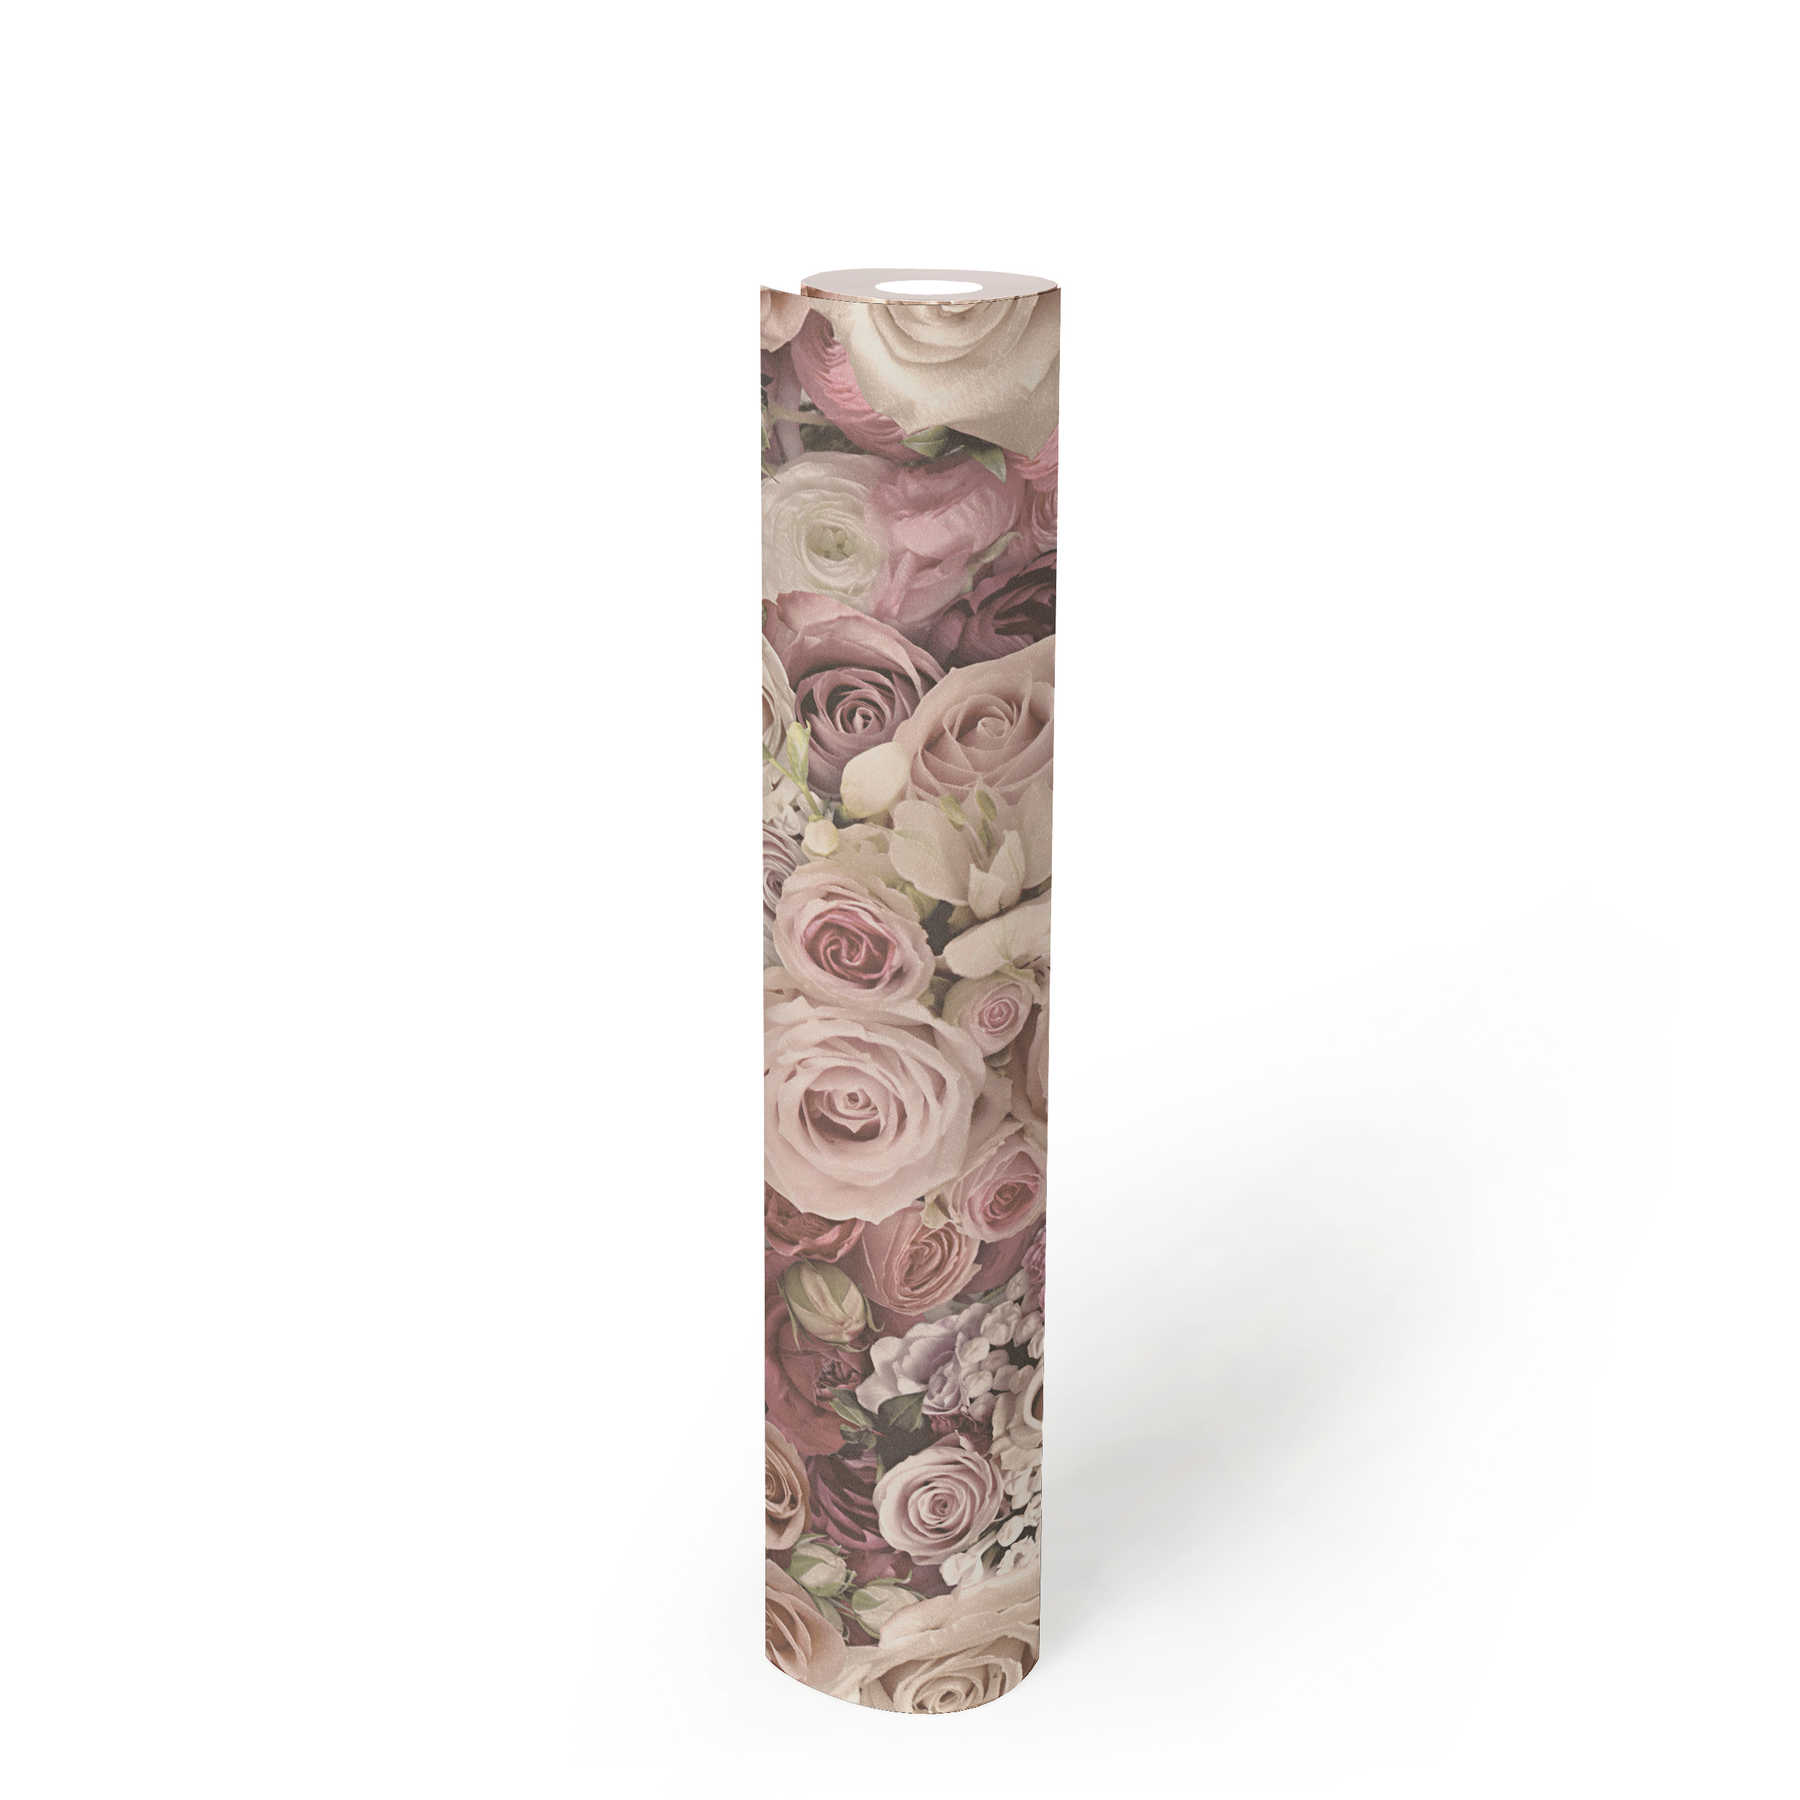             Wallpaper roses in delicate pink sea of flowers - cream
        